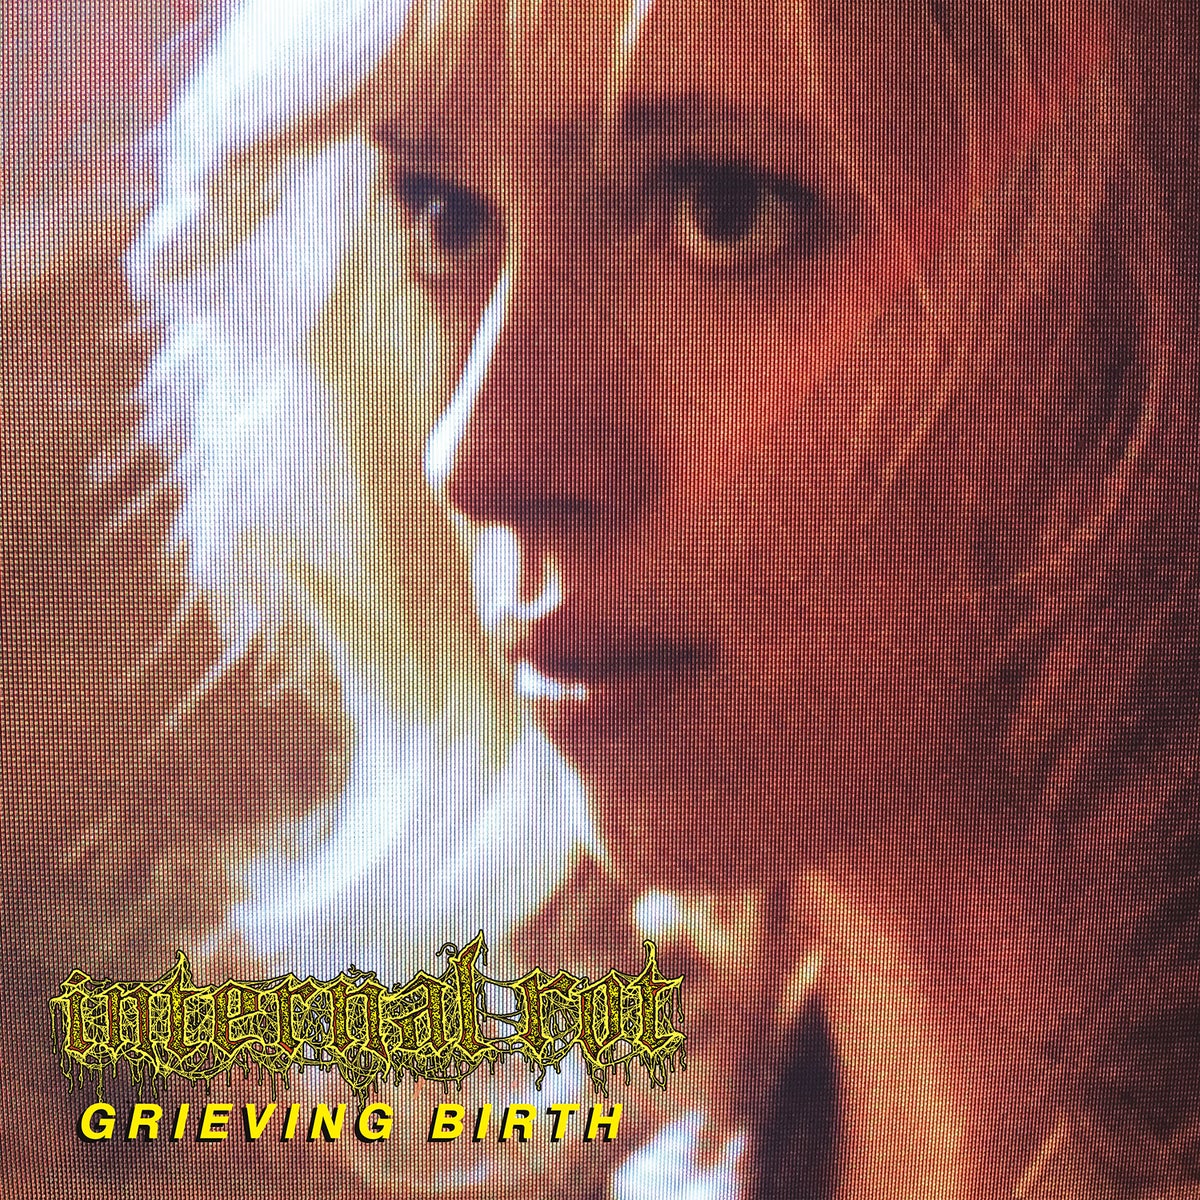 Internal Rot "Grieving Birth" LP